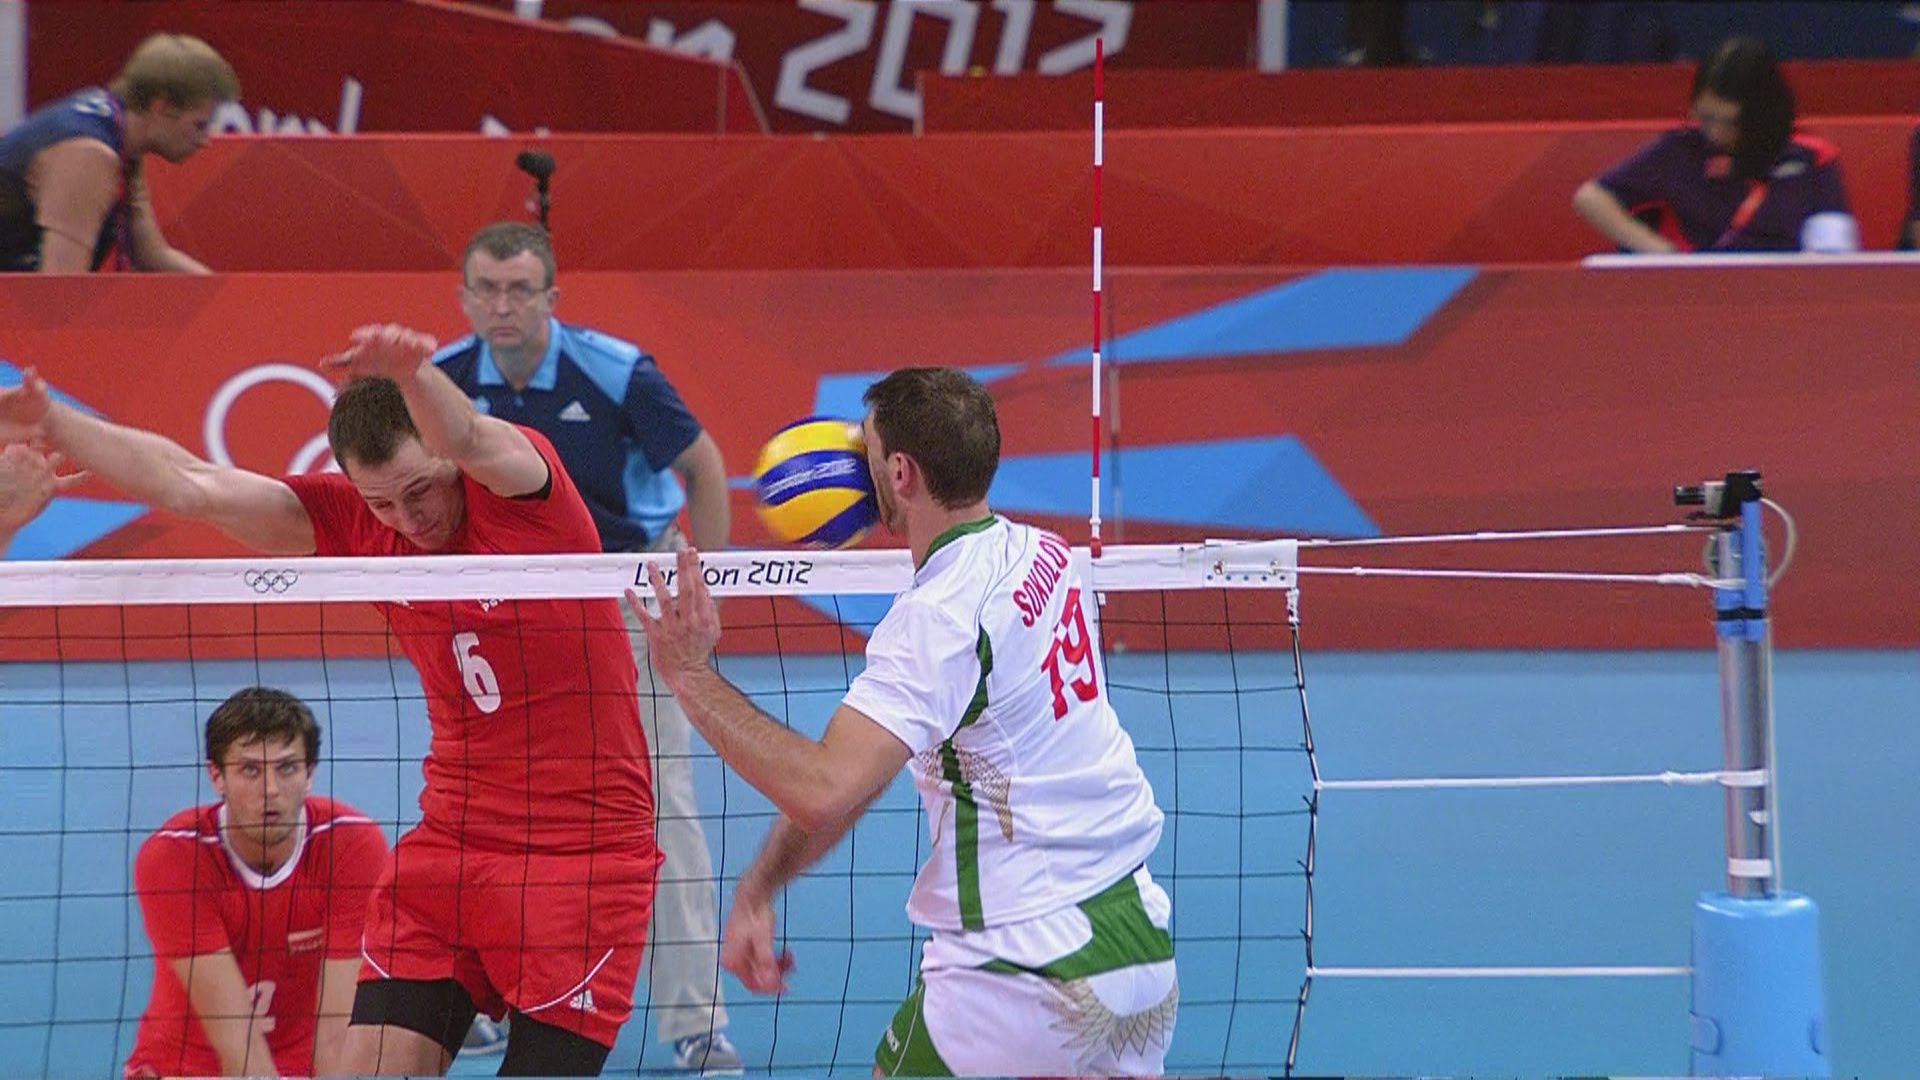 Men's Volleyball - Poland v Bulgaria Pool A | London 2012 Olympics ...